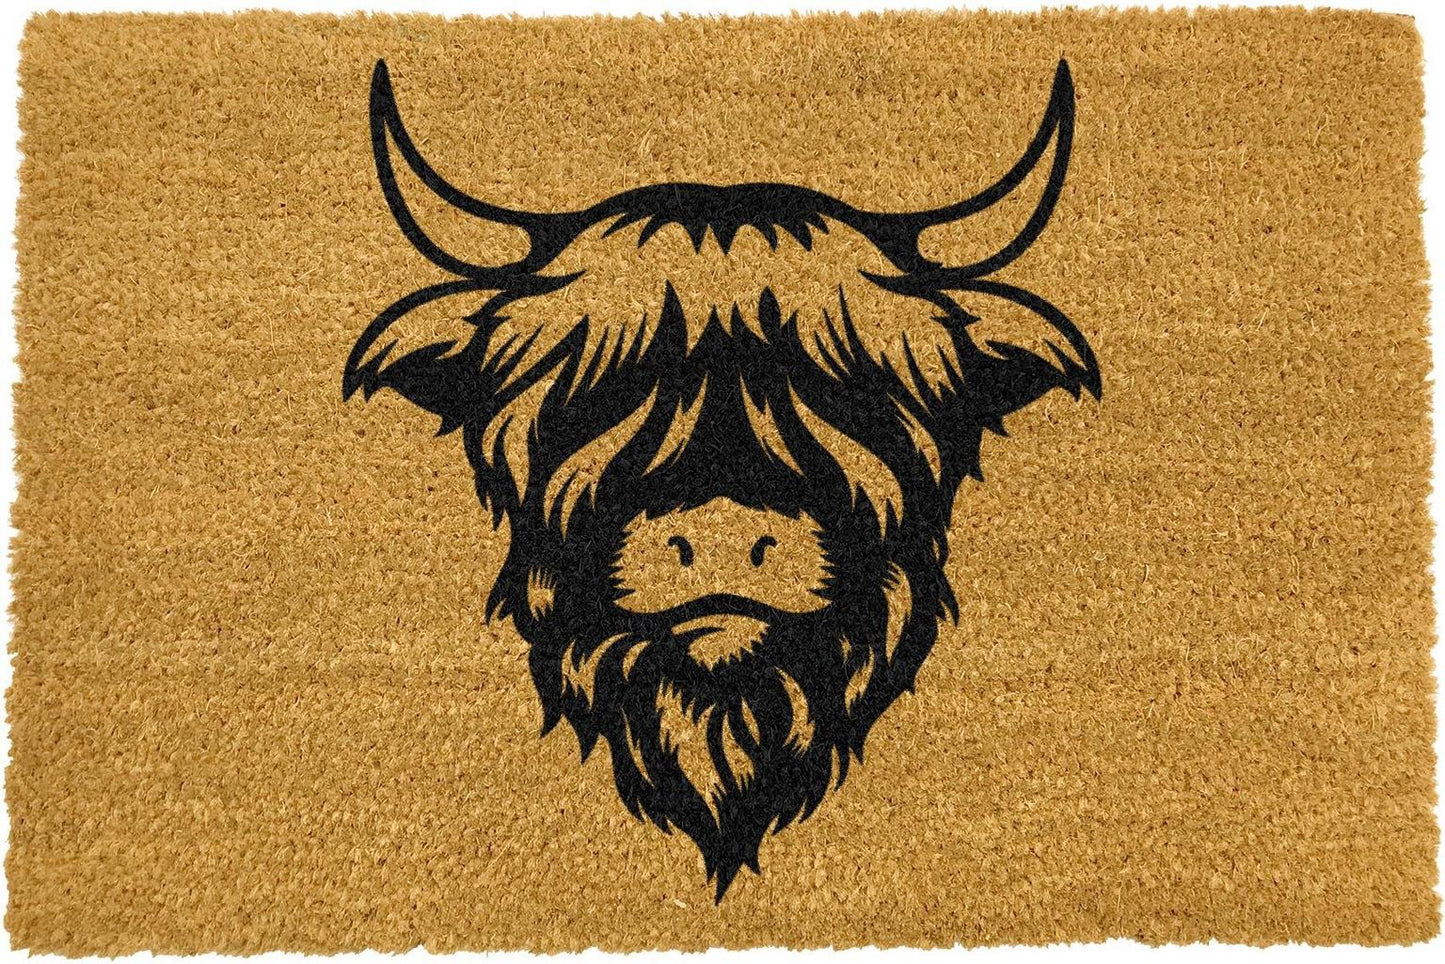 Artsy Mats Highland Cow Doormat 60 x 40 CM 9502131557572